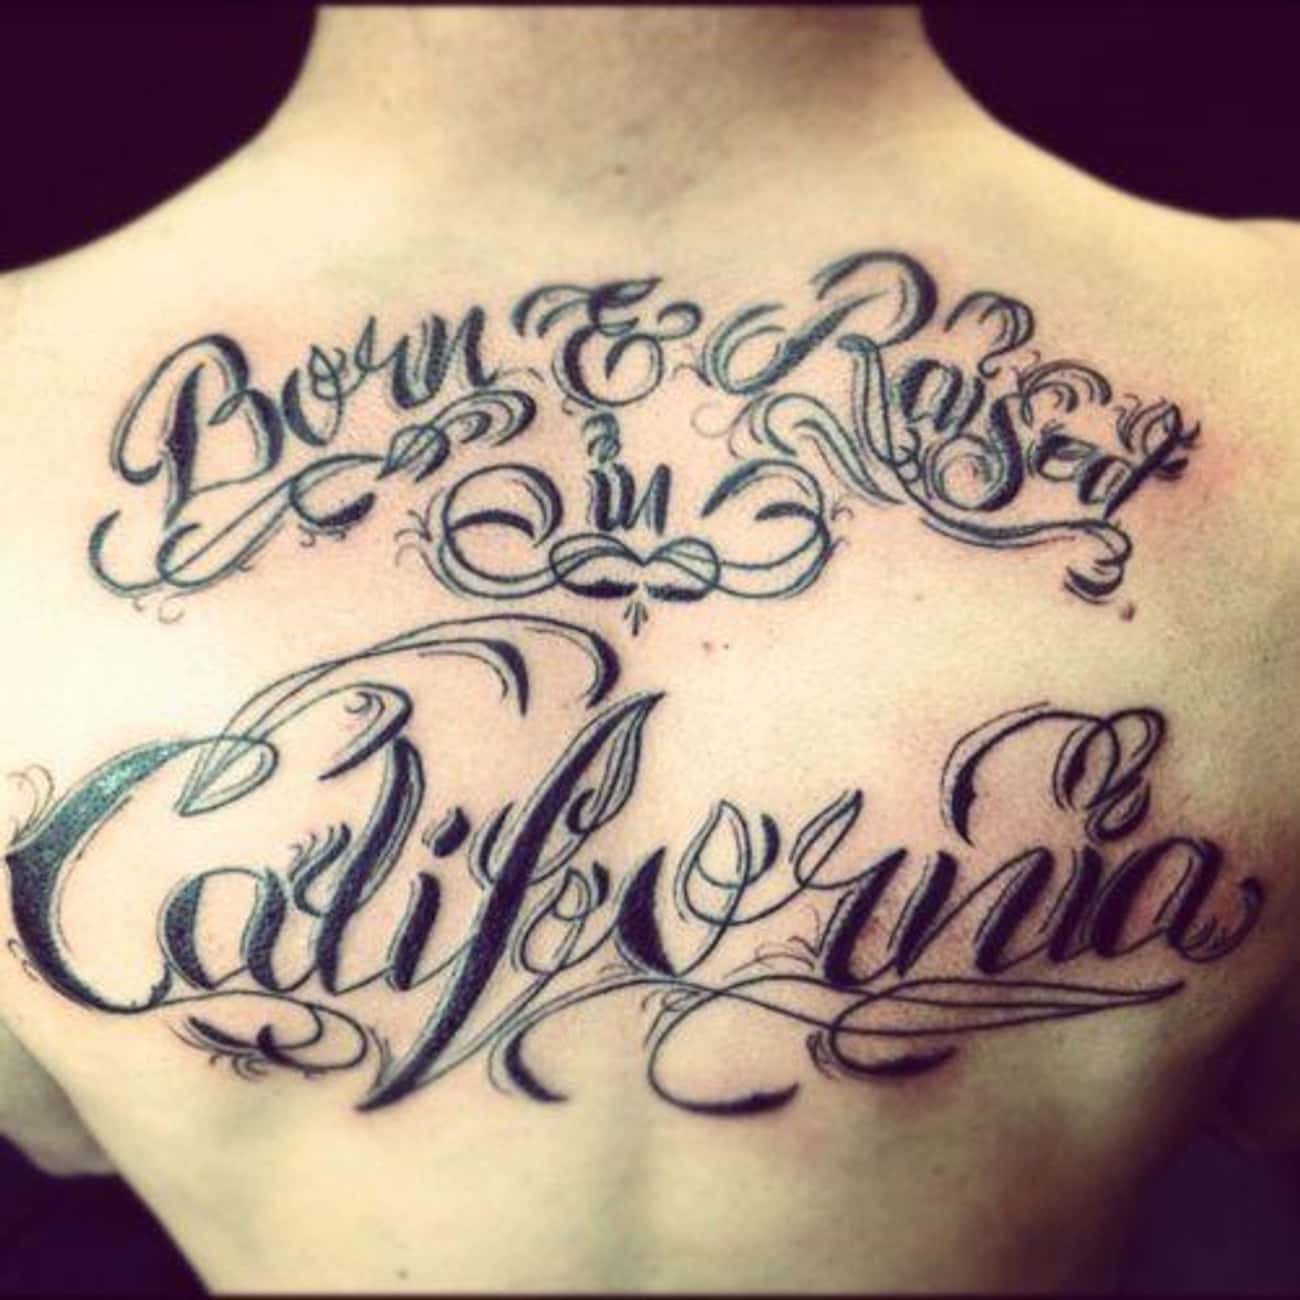 California Lettering Tattoo On Back